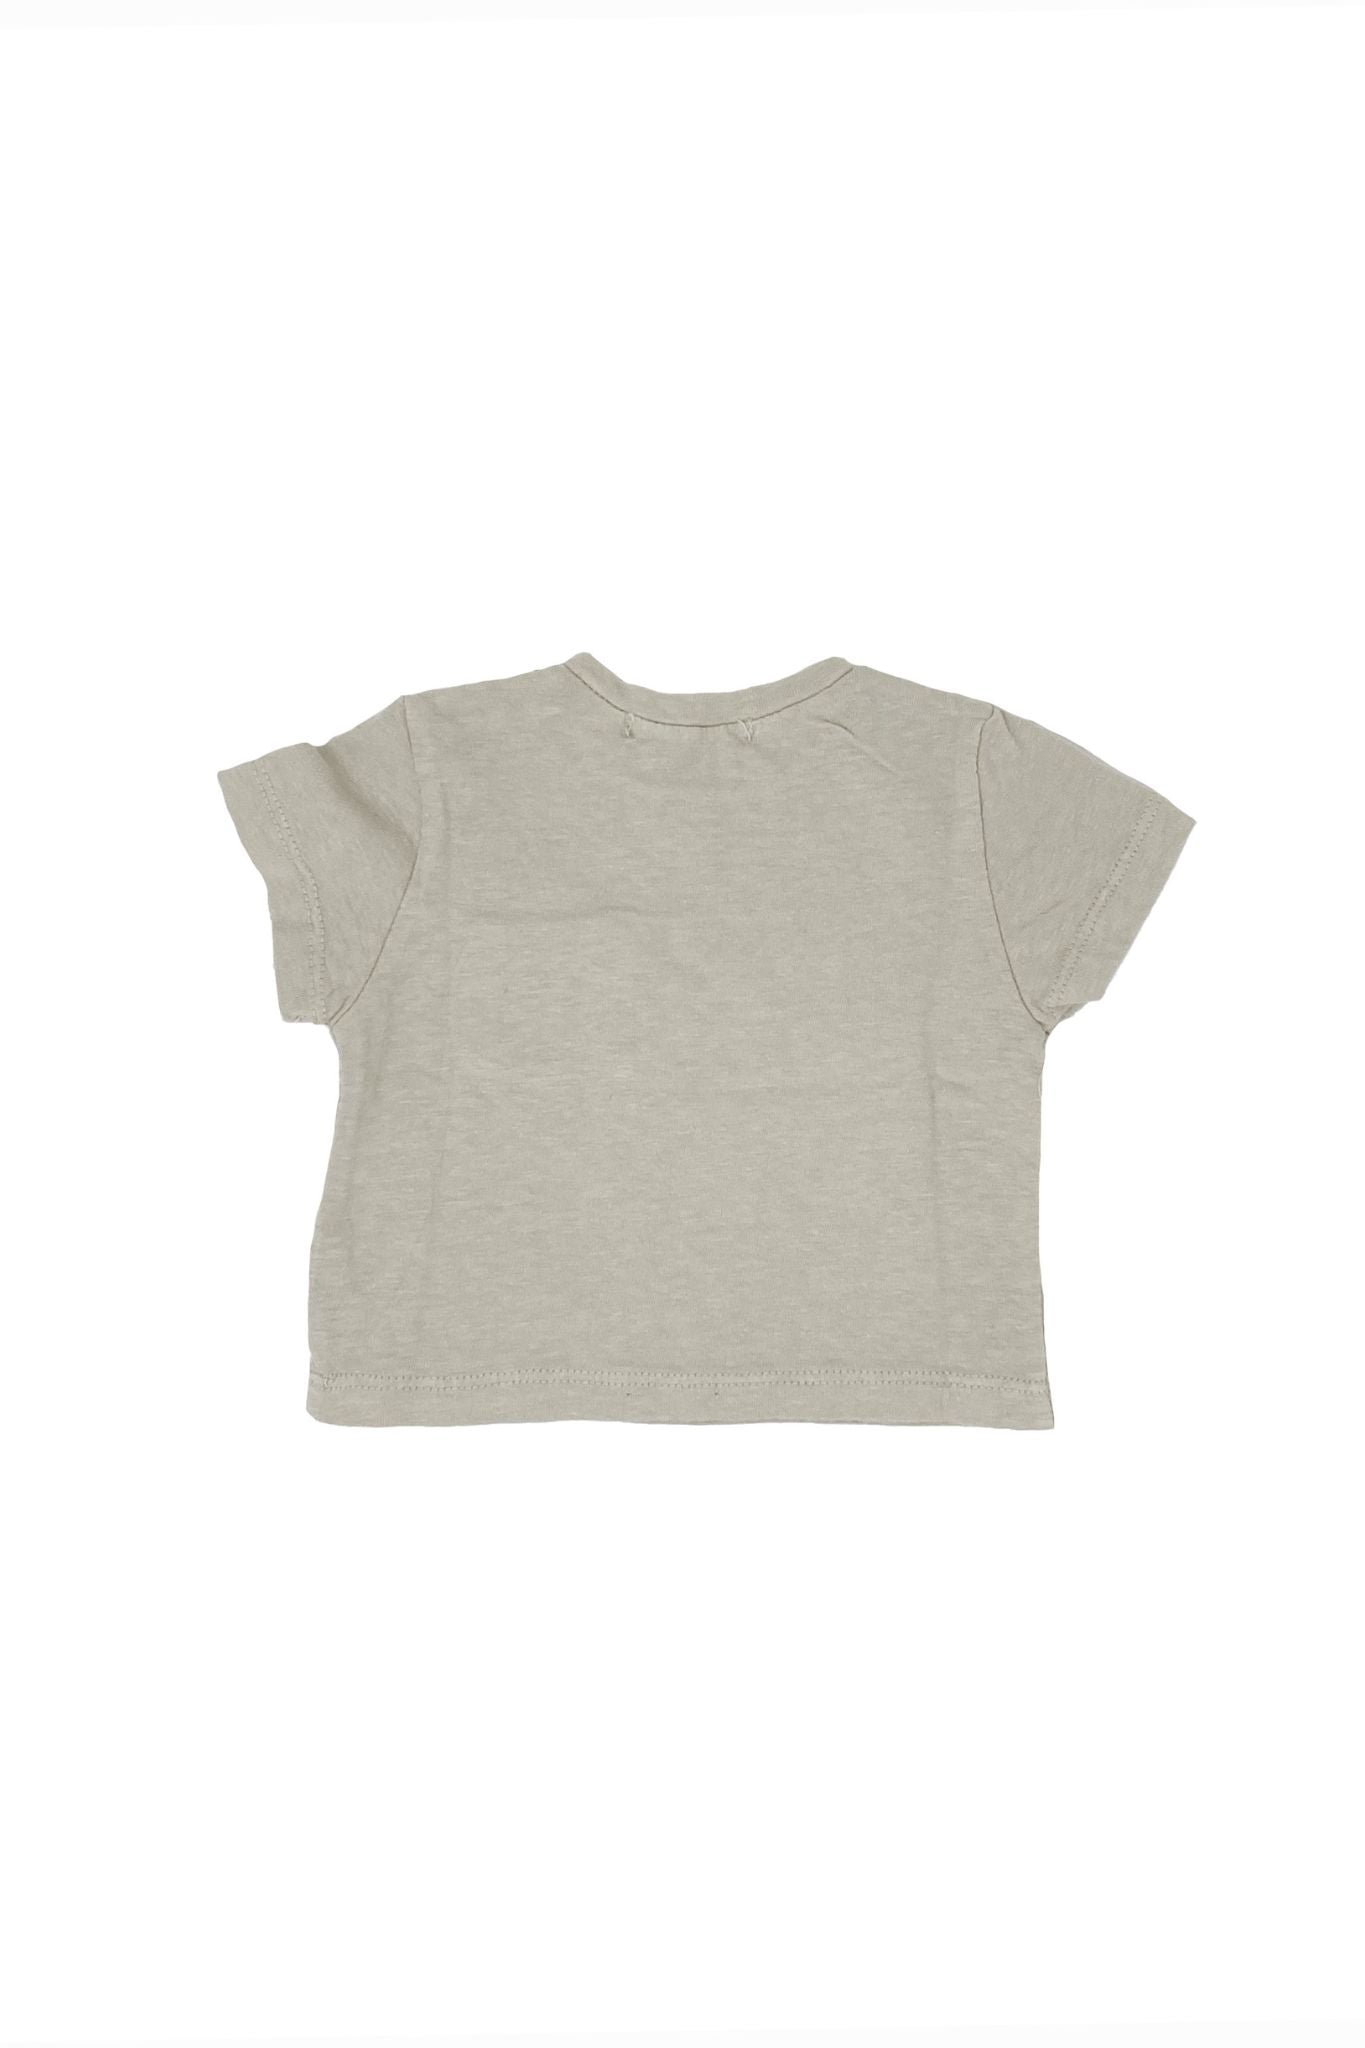 Tiny Soul Grey T-Shirt